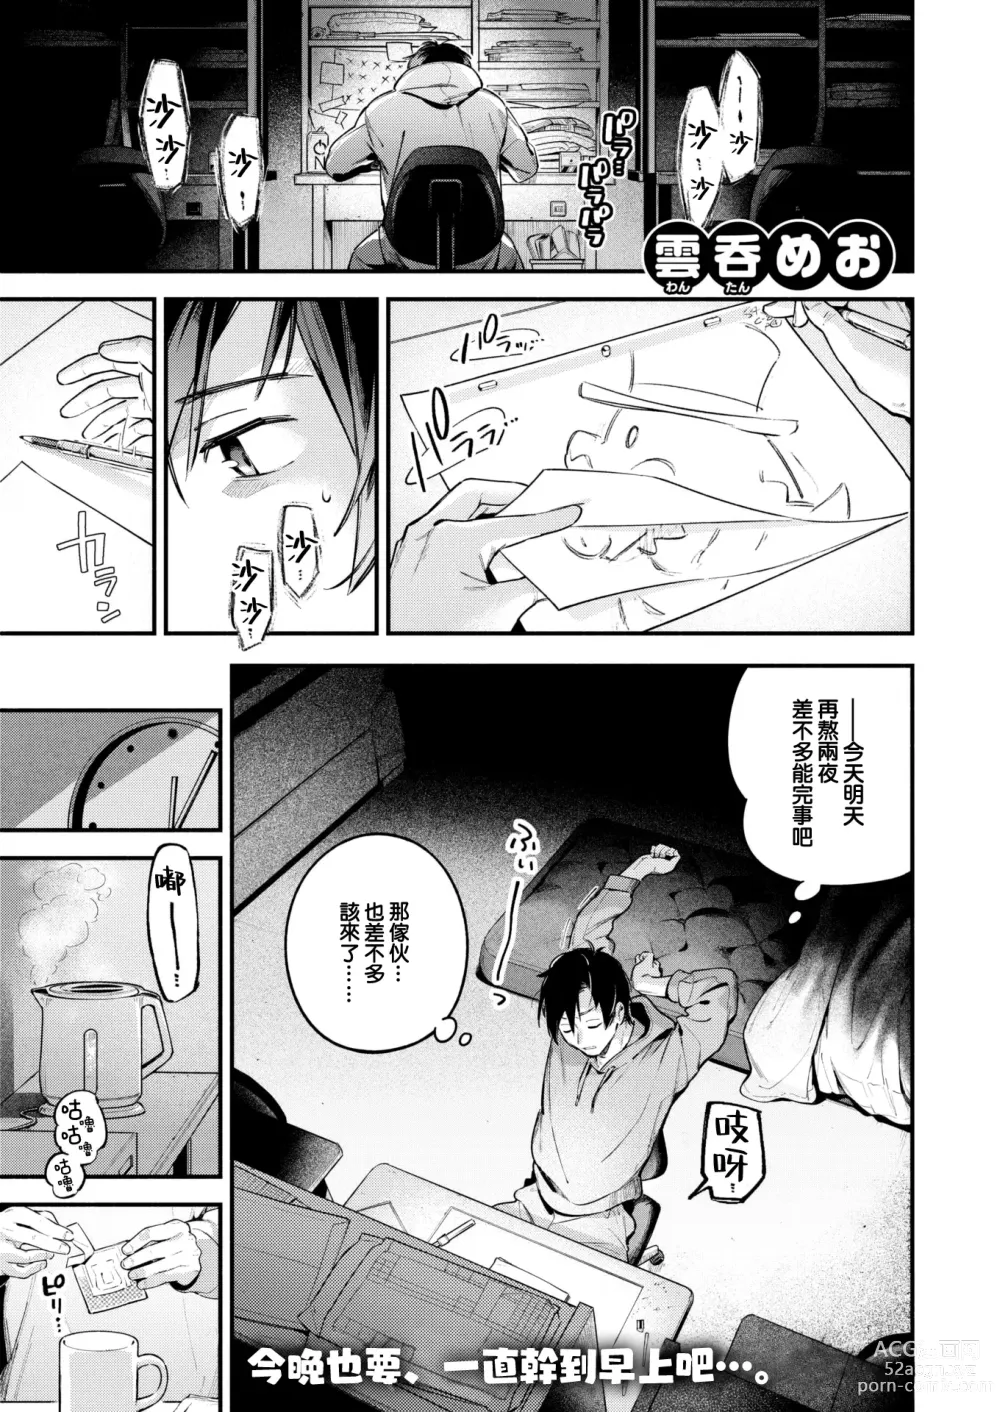 Page 2 of manga Latelier (decensored)